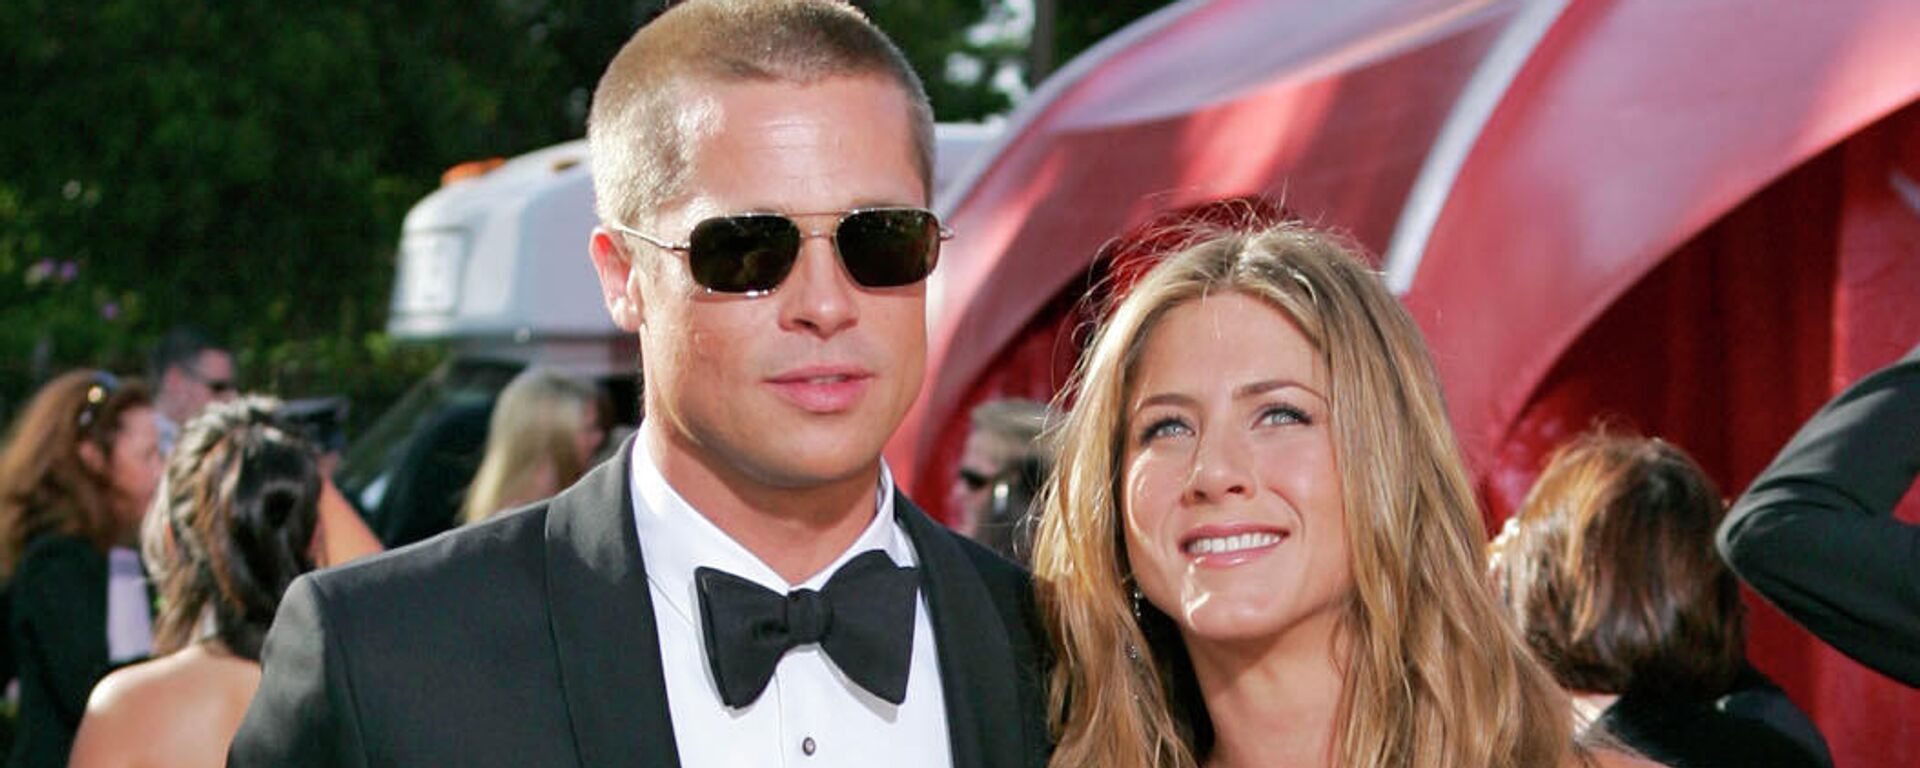 Los actores estadounidenses Brad Pitt y Jennifer Aniston en 2004 - Sputnik Mundo, 1920, 28.06.2021